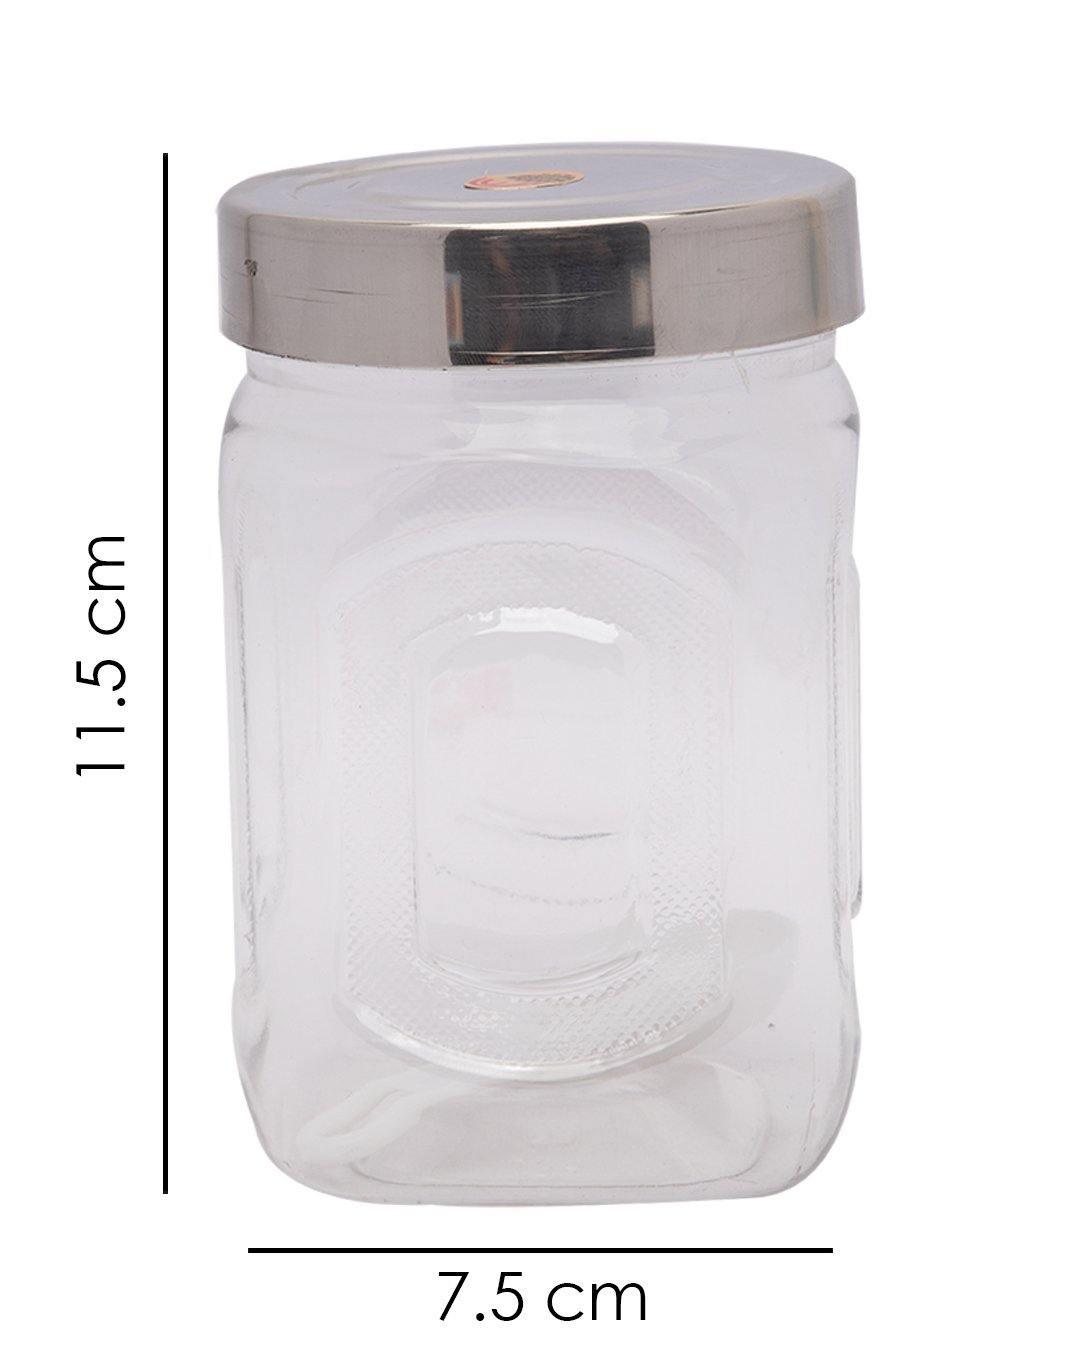 Jar, with Steel Cap, Square, Transparent, Plastic, Set of 2, 500 mL - MARKET 99